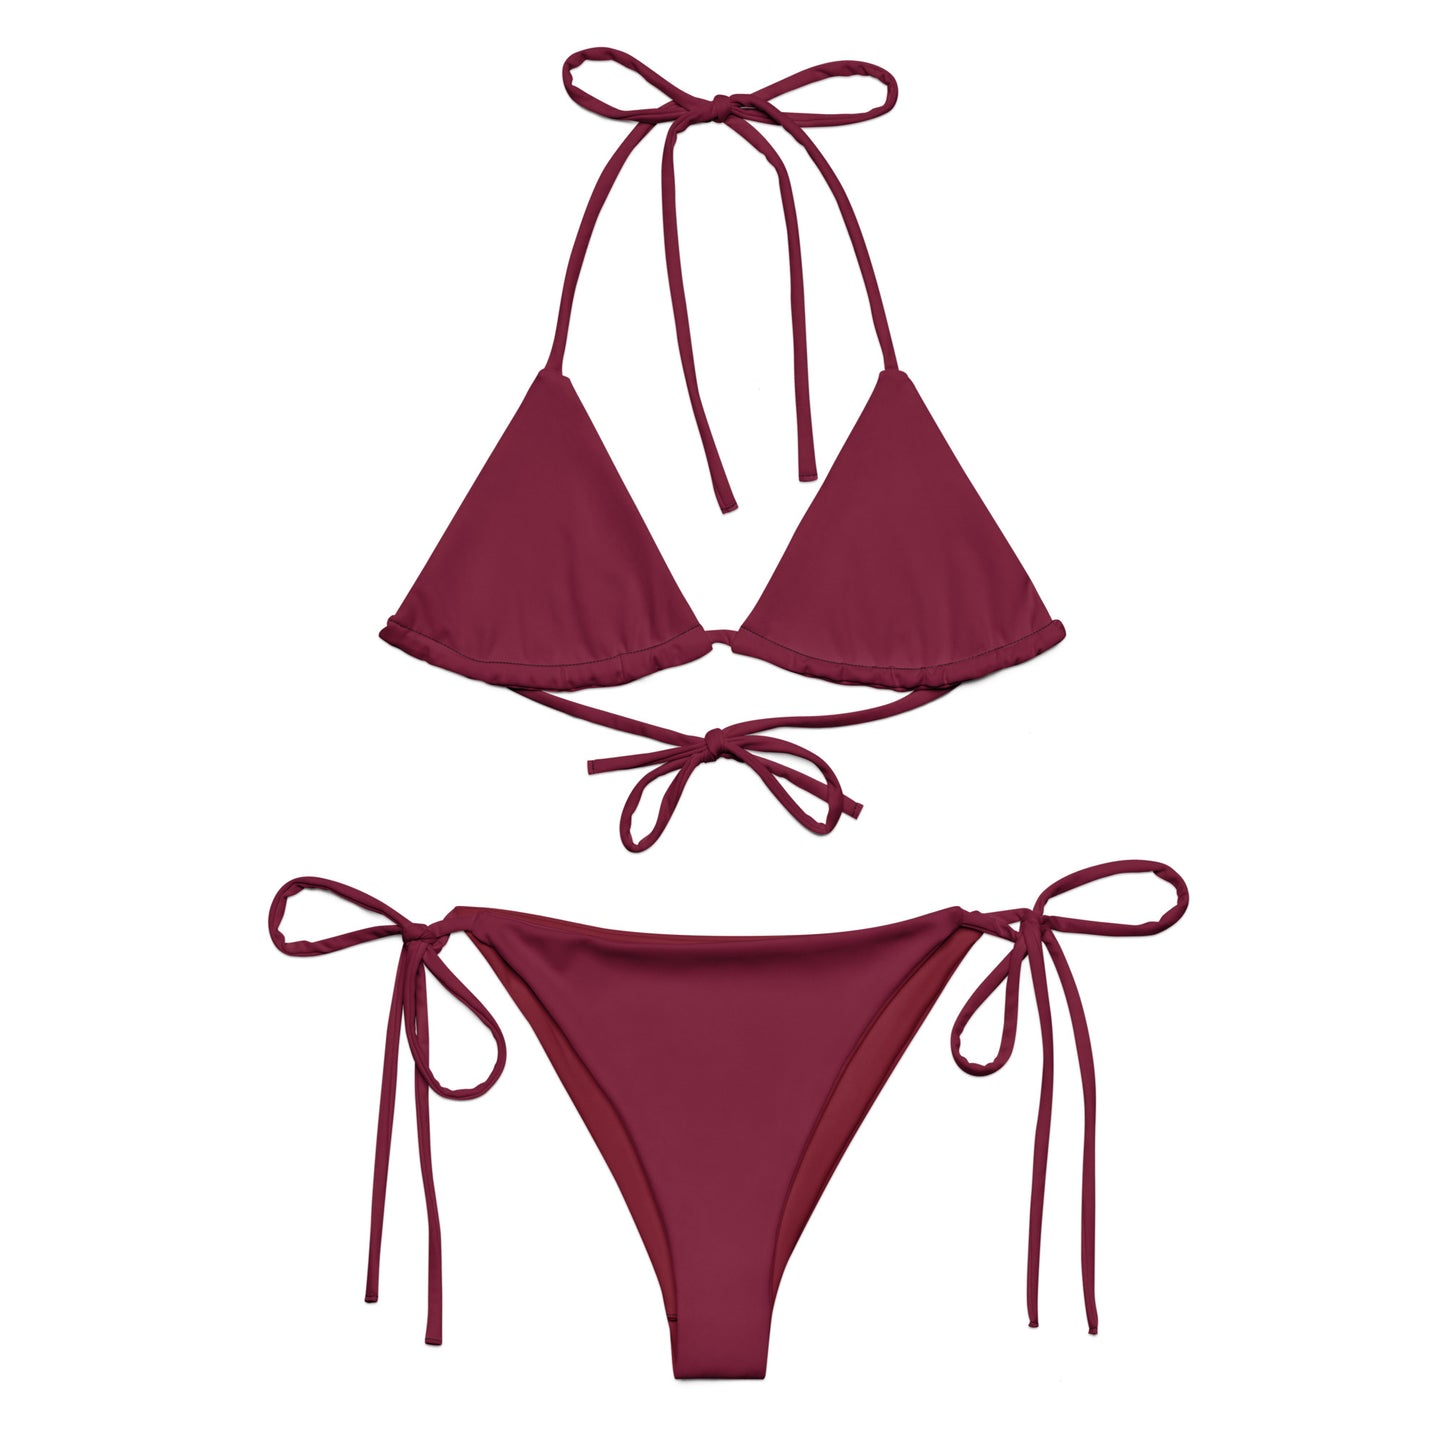 Claret ruby red Recycled string bikini set, triangle bikini